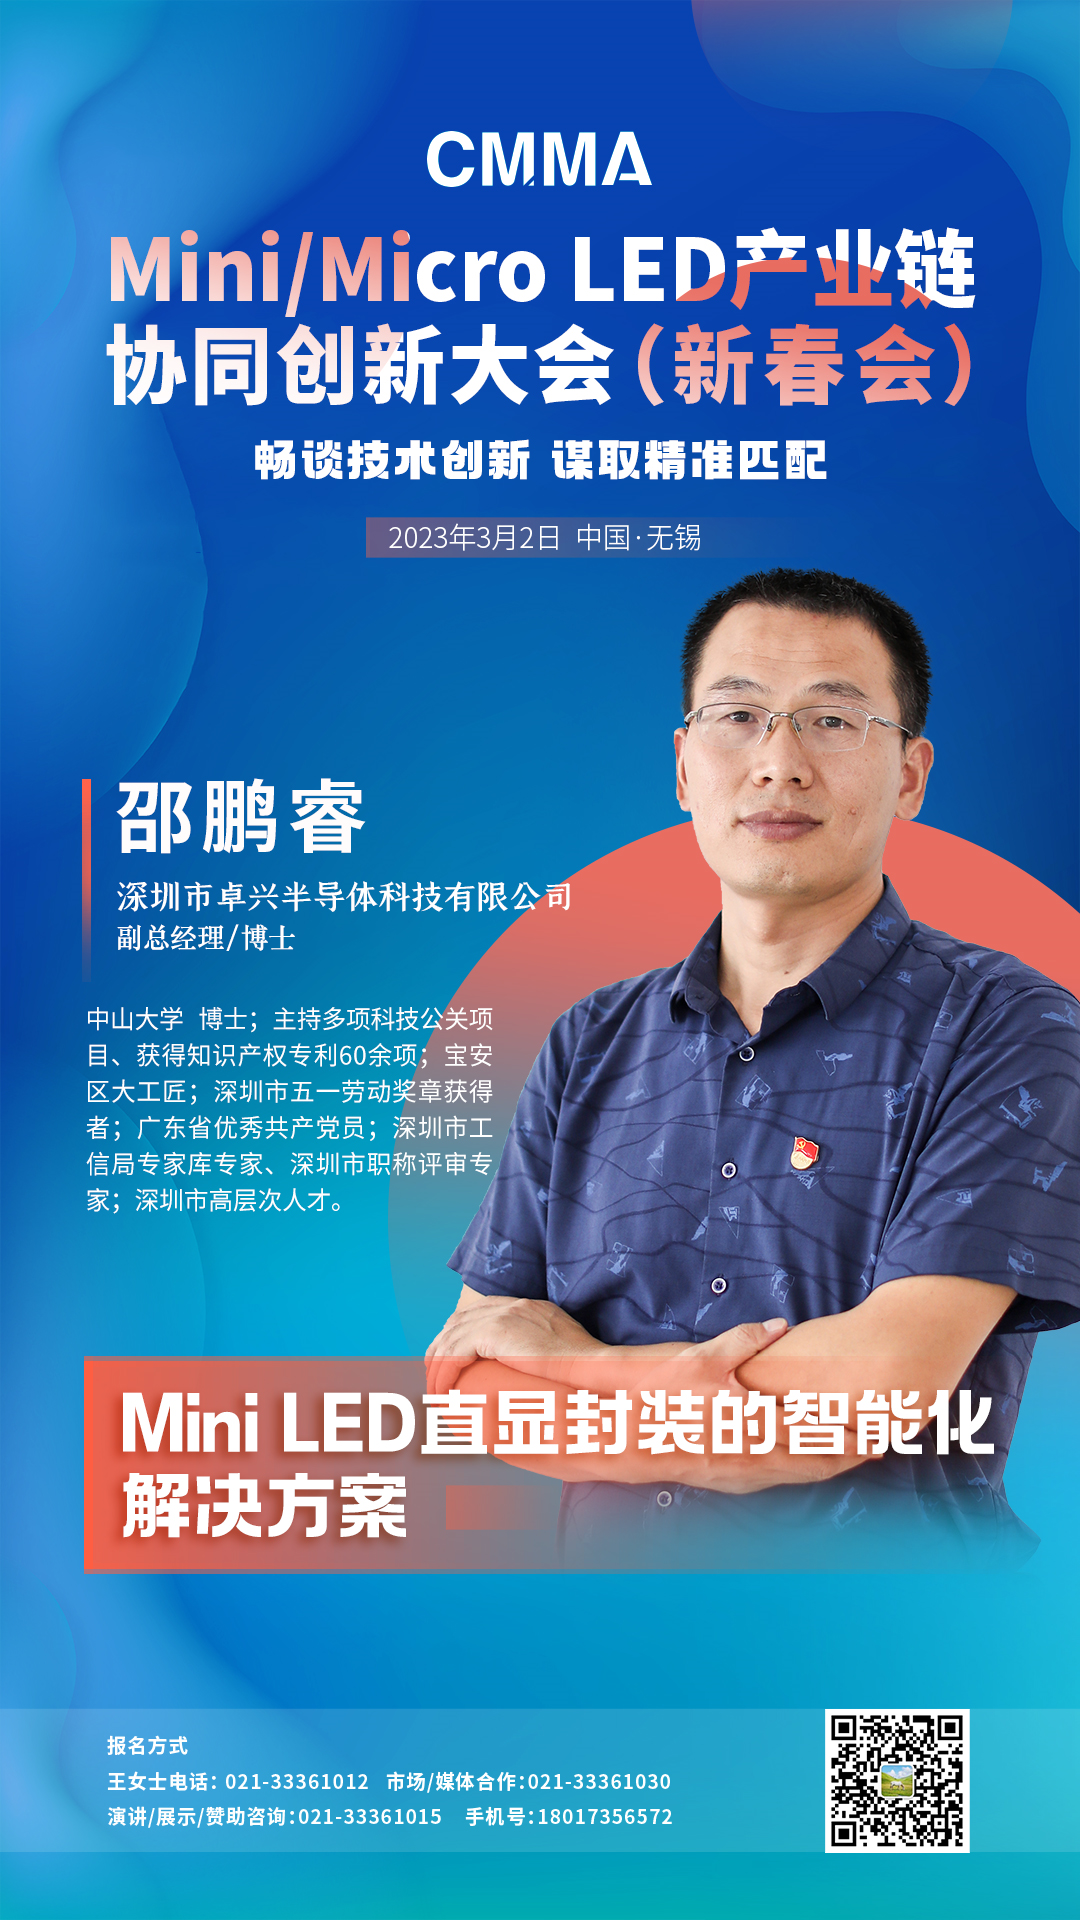 Mini/Micro LED产业链协同创新大会即将召开，我的人间烟火邵鹏睿畅谈技术创新！